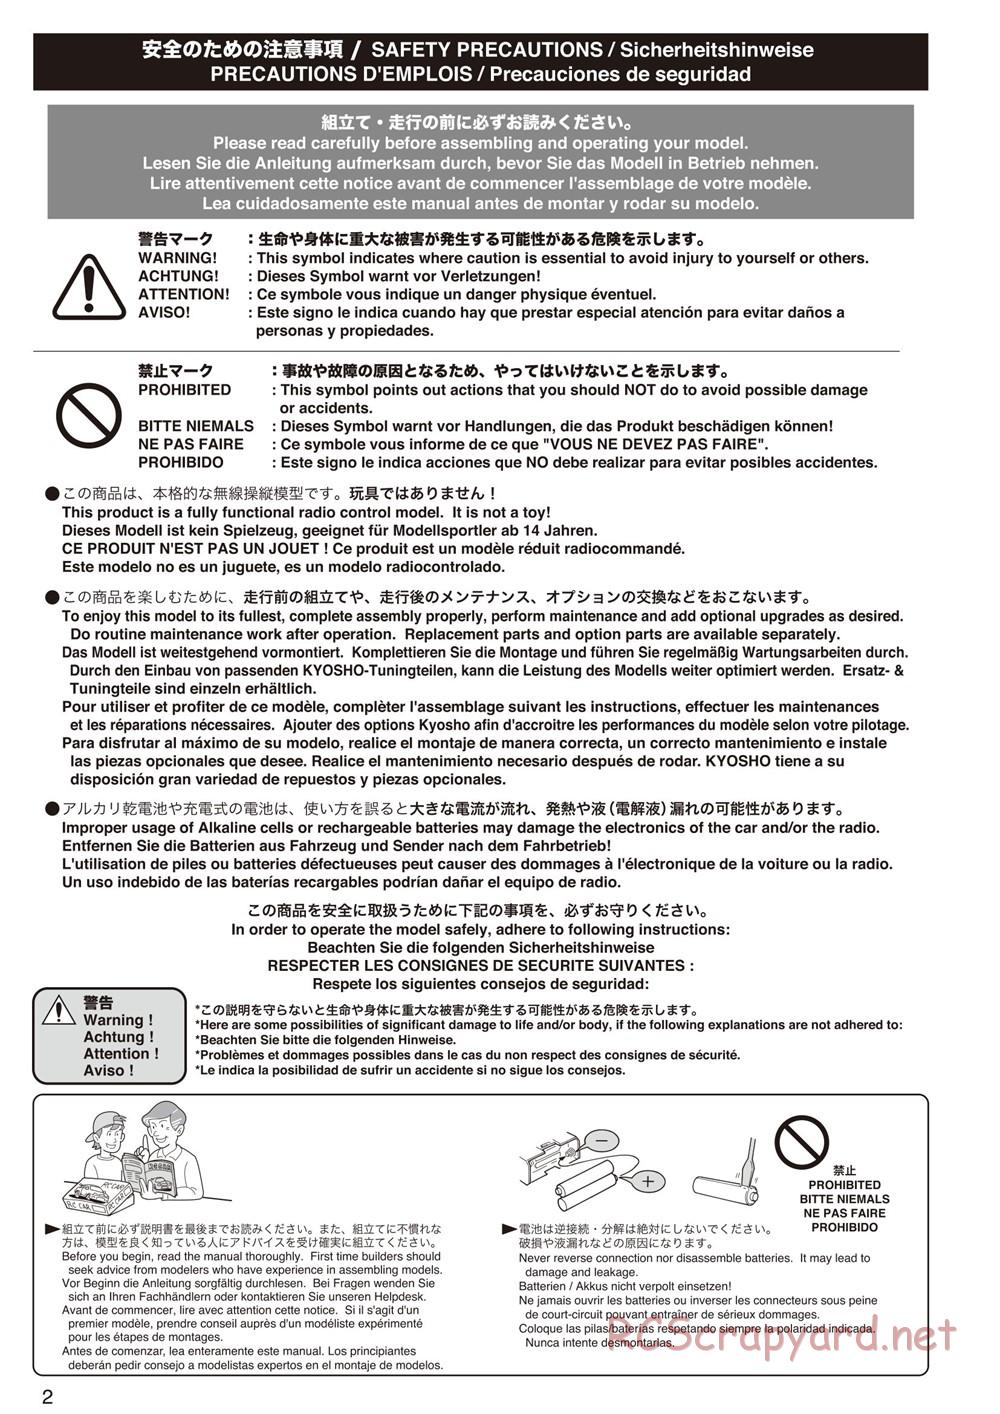 Kyosho - FO-XX GP - Manual - Page 2